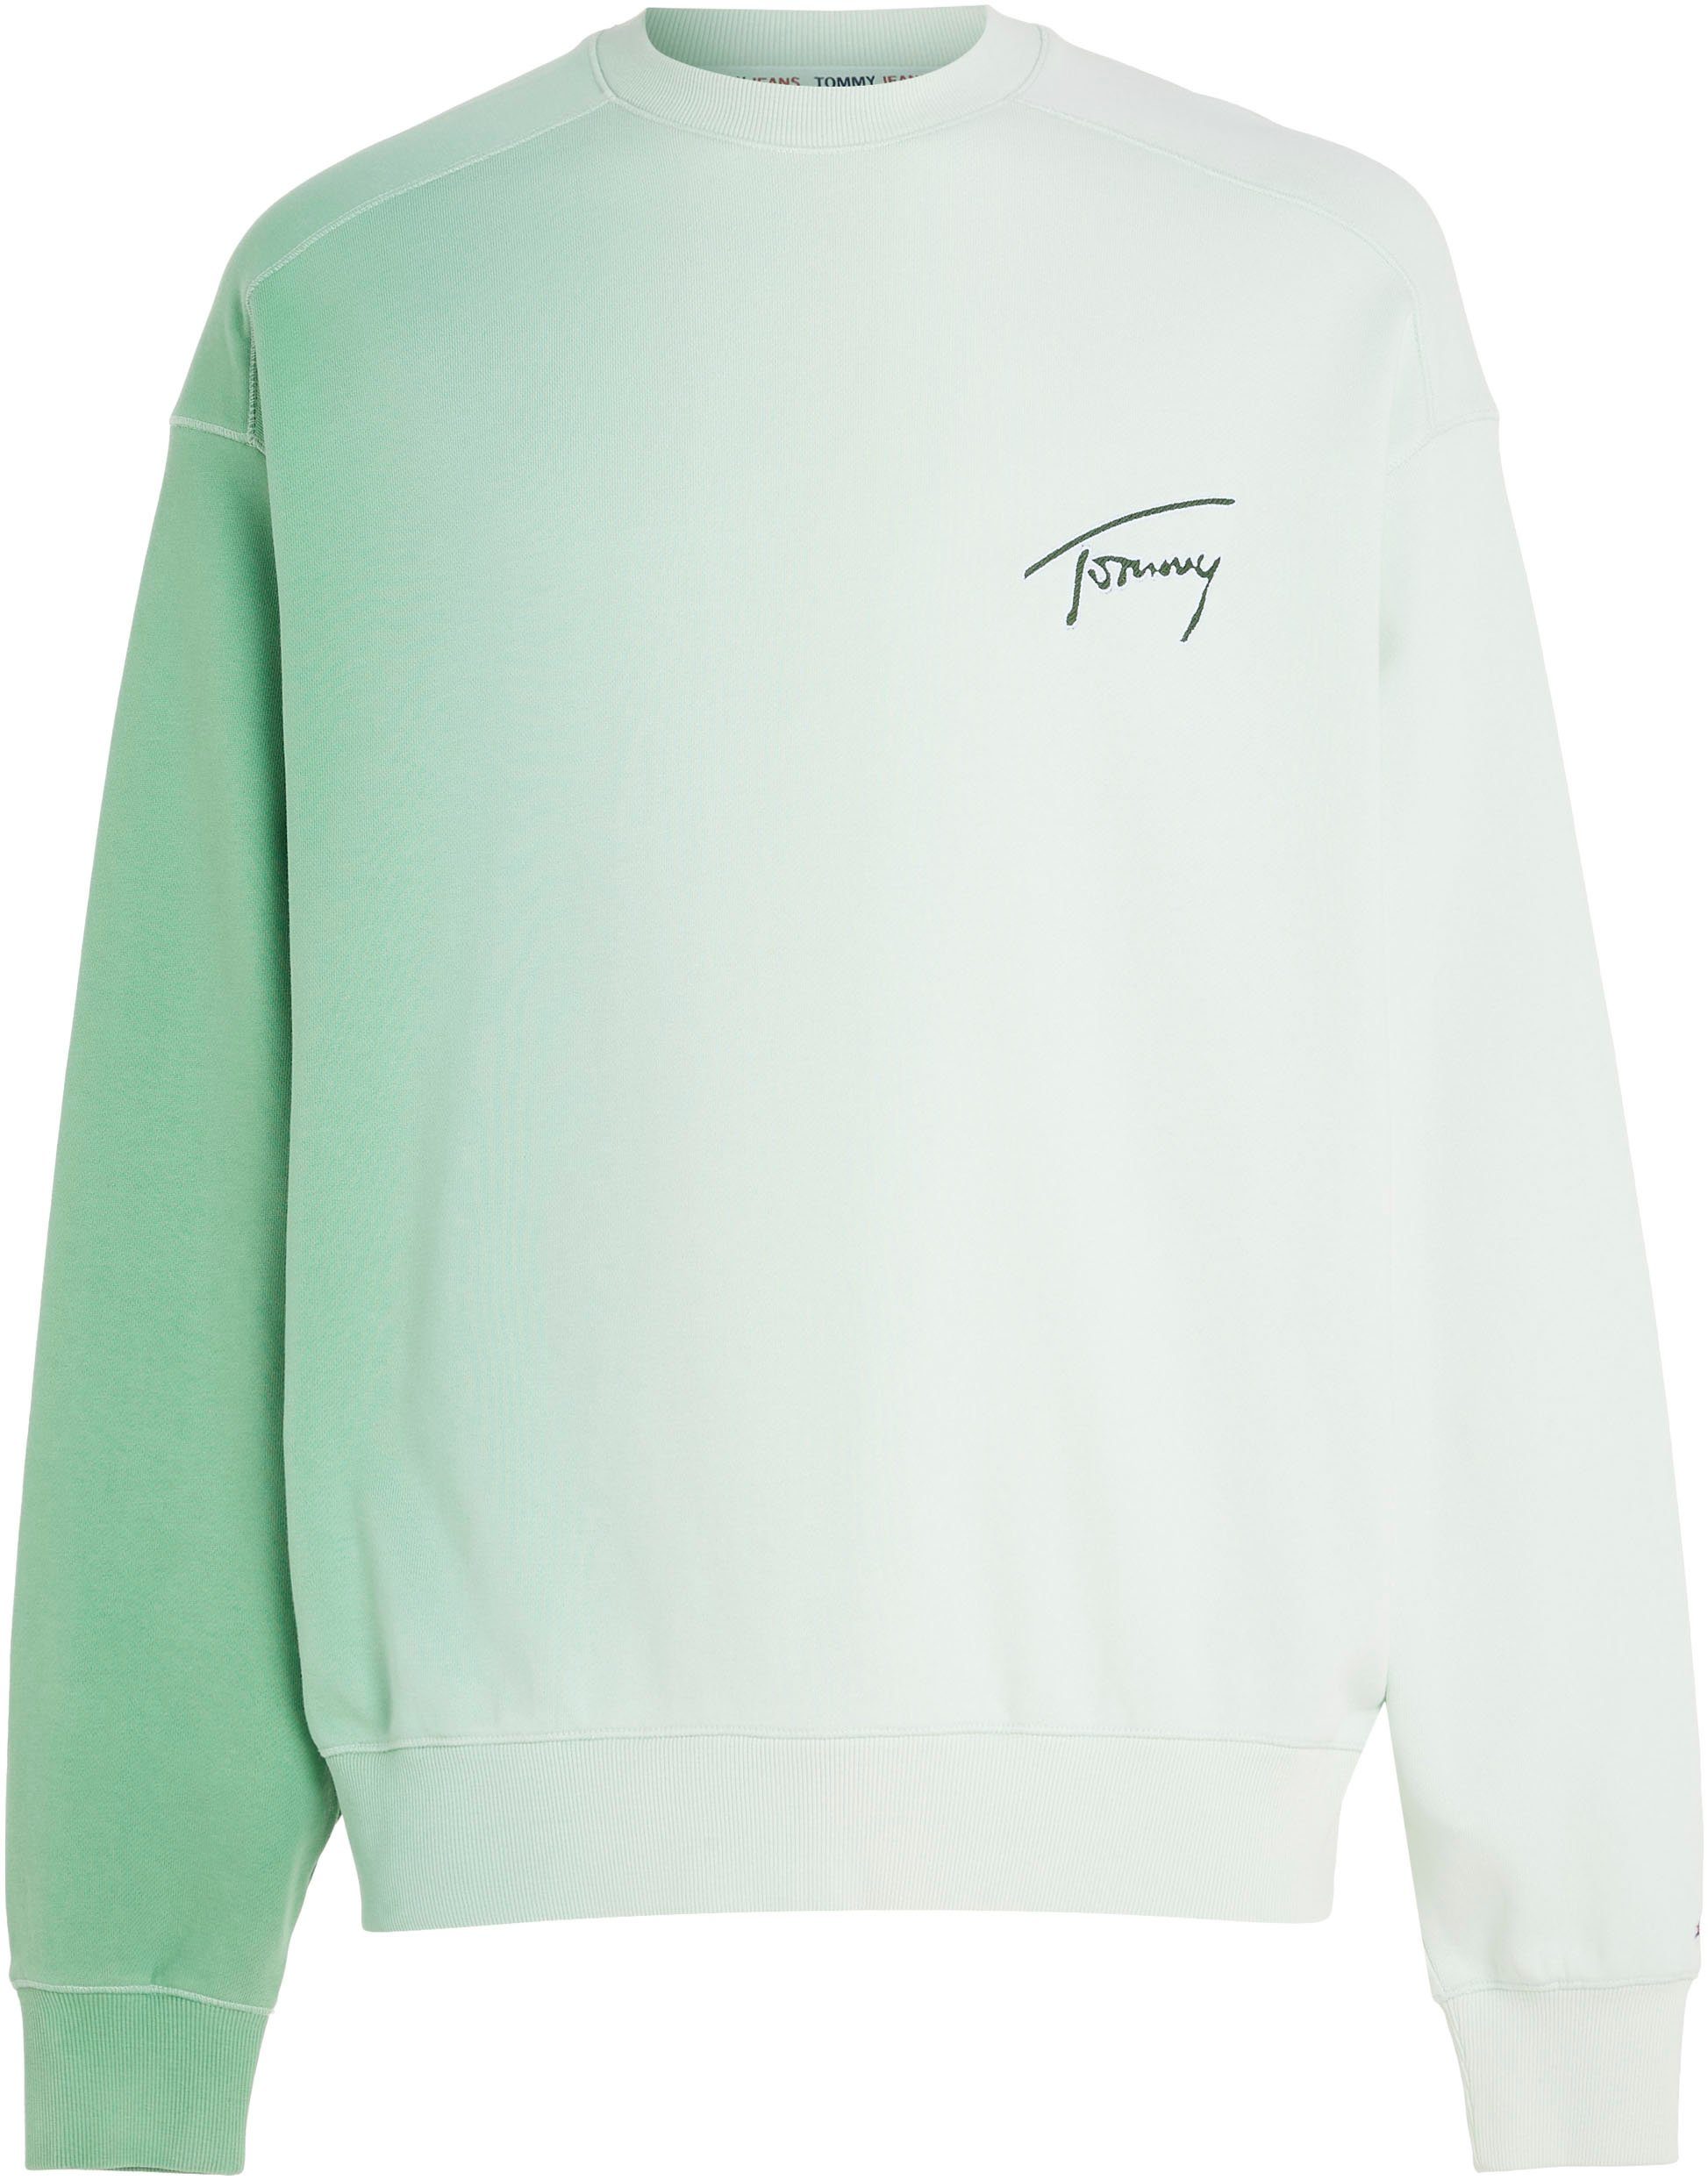 DIP Dip Tommy TJM Jeans Dye Sweatshirt CREW SIGNATURE BOXY Optik DYE in CoastalGreen/Multi